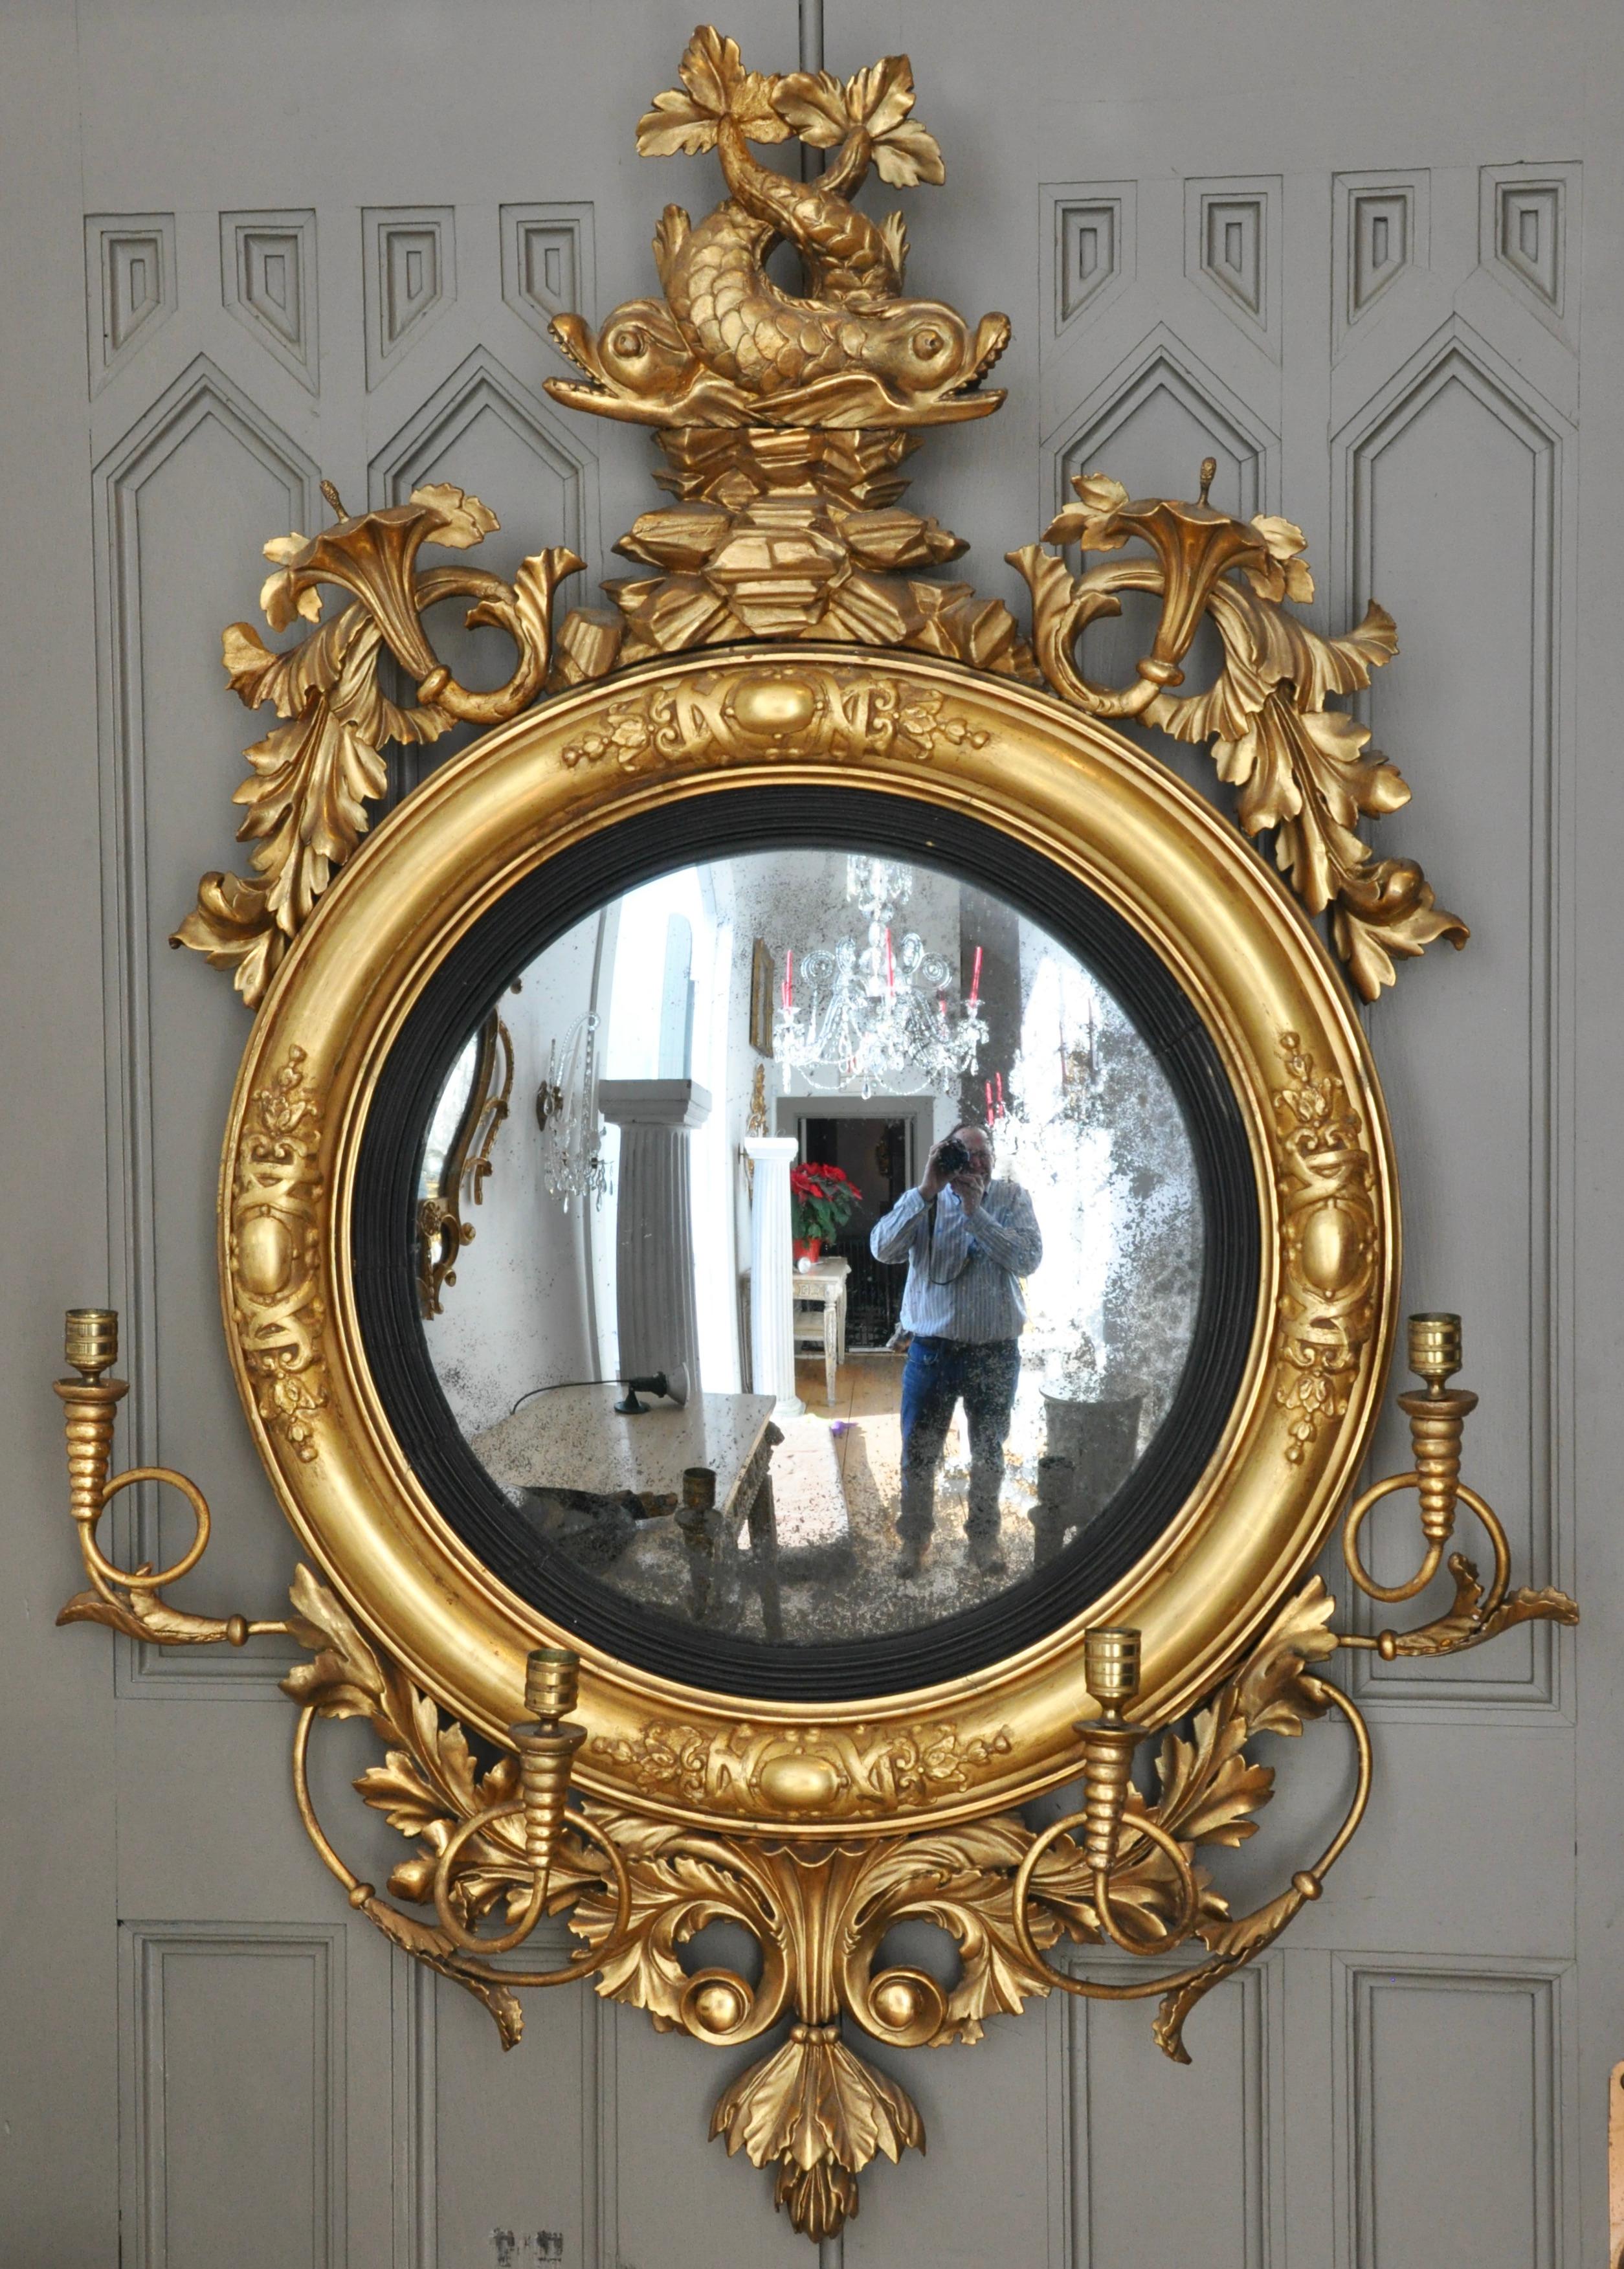 Period English Regency giltwood convex girandole mirror. Dolphin top. Original candle arms. Original gilding. Original Mirror

--Provenance: Museum of Fine Arts, Boston, Loan Exhibition, 1917-25, Loan # 351.17.